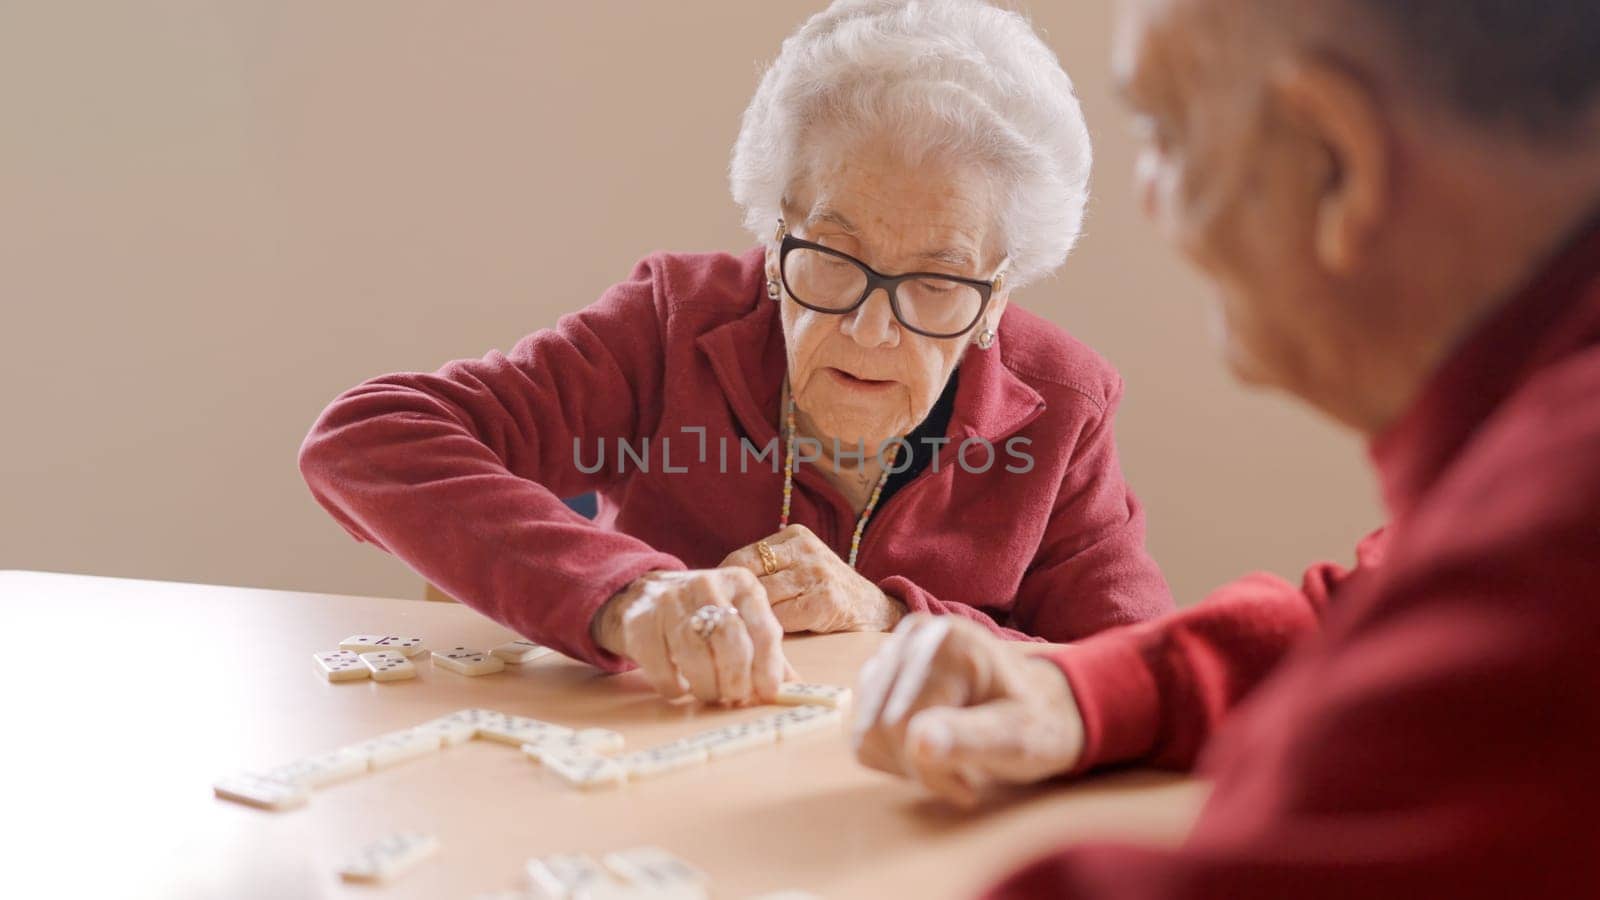 Senior people playing dominoes patiently in nursing home by ivanmoreno